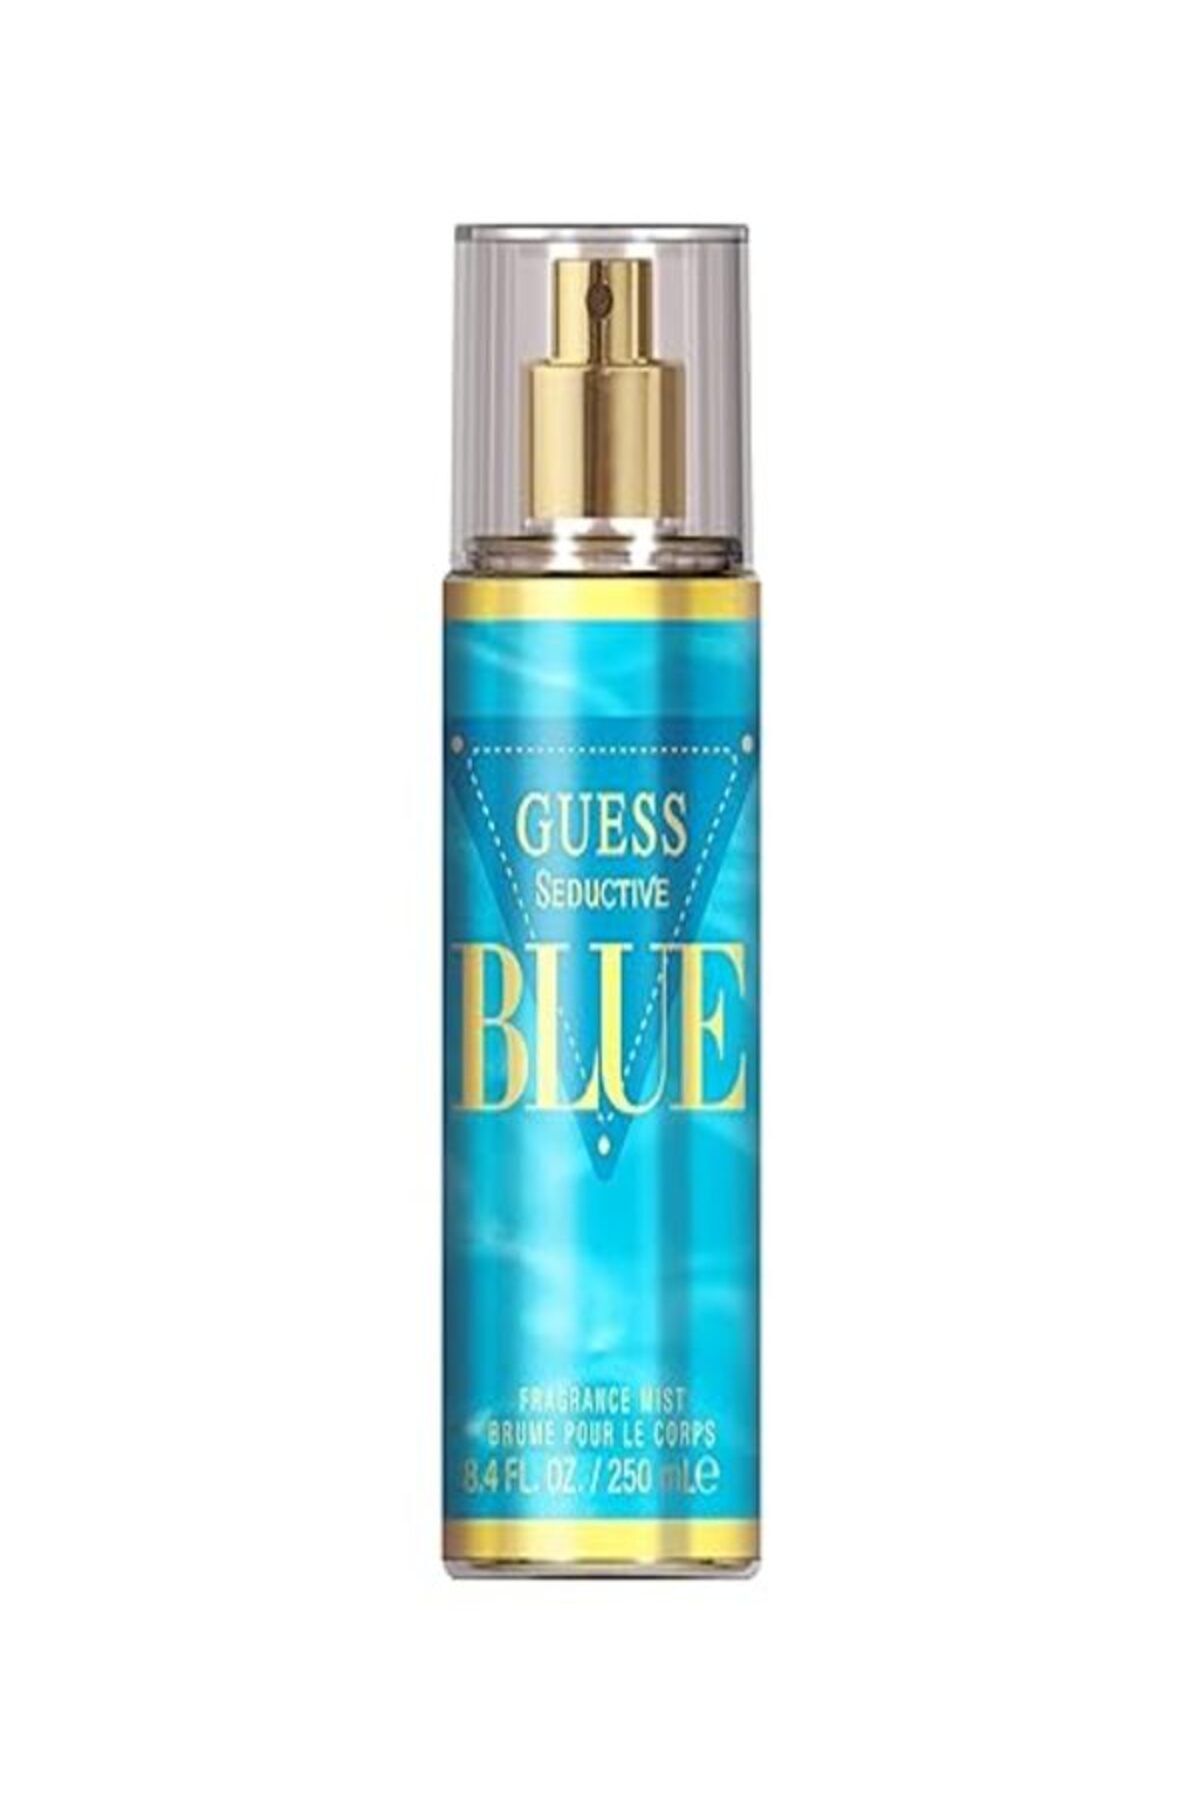 Guess Seductive Blue For Women Frag Mist 250 ml